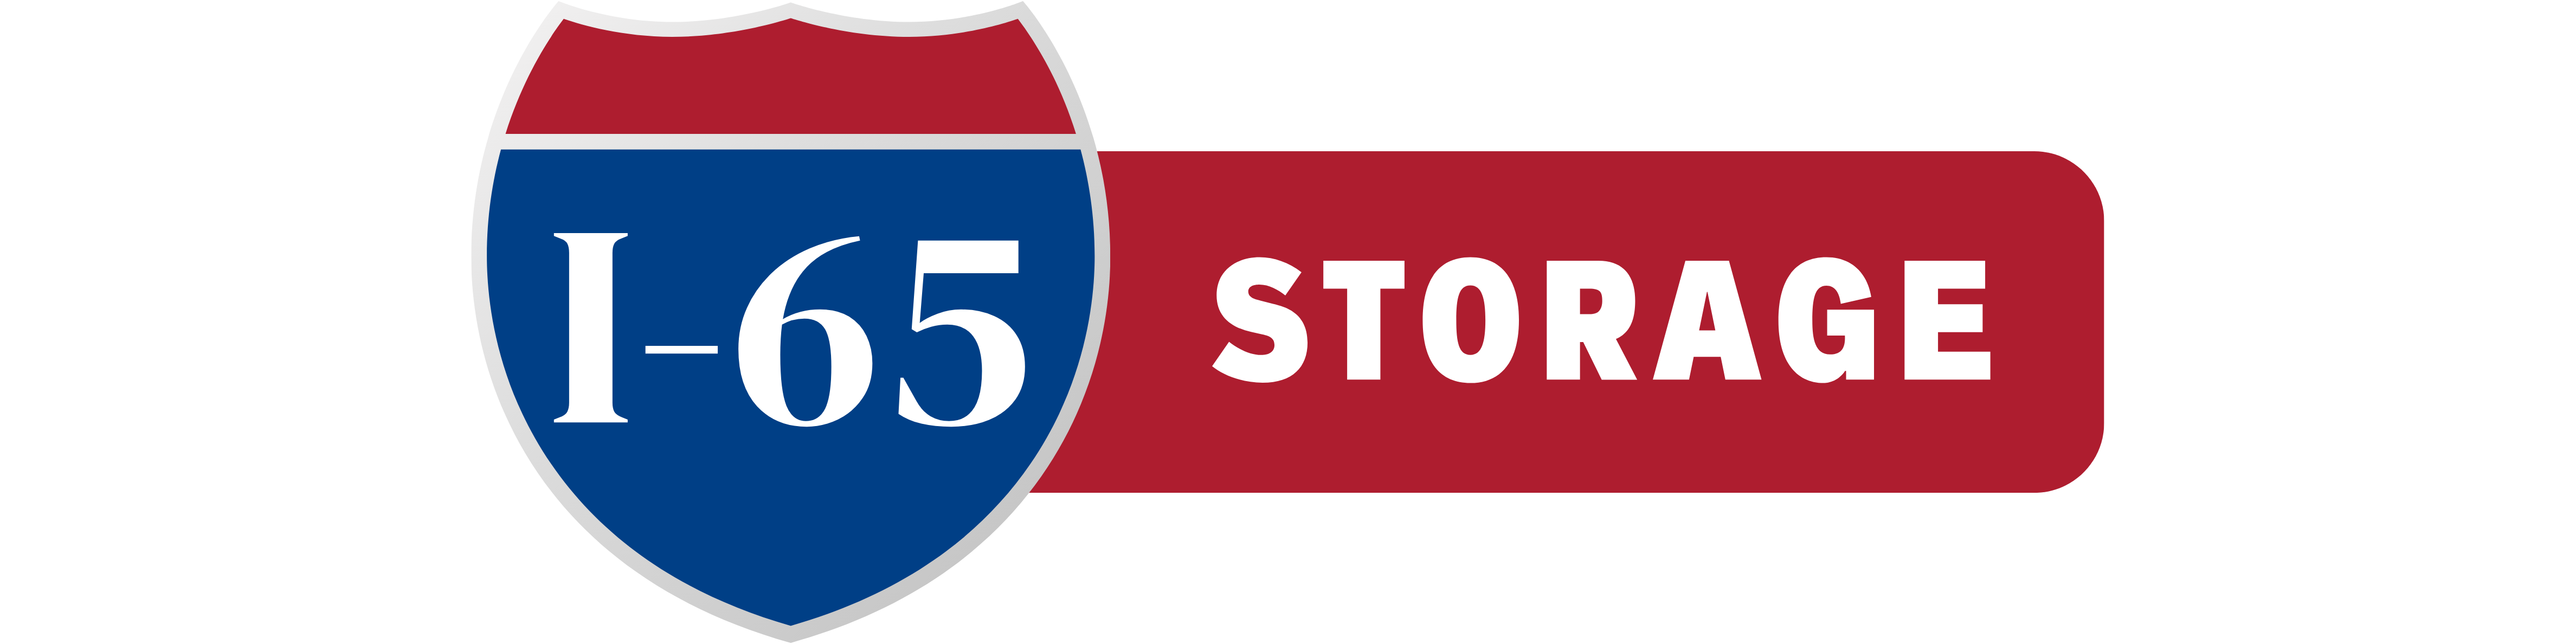 I-65 Storage